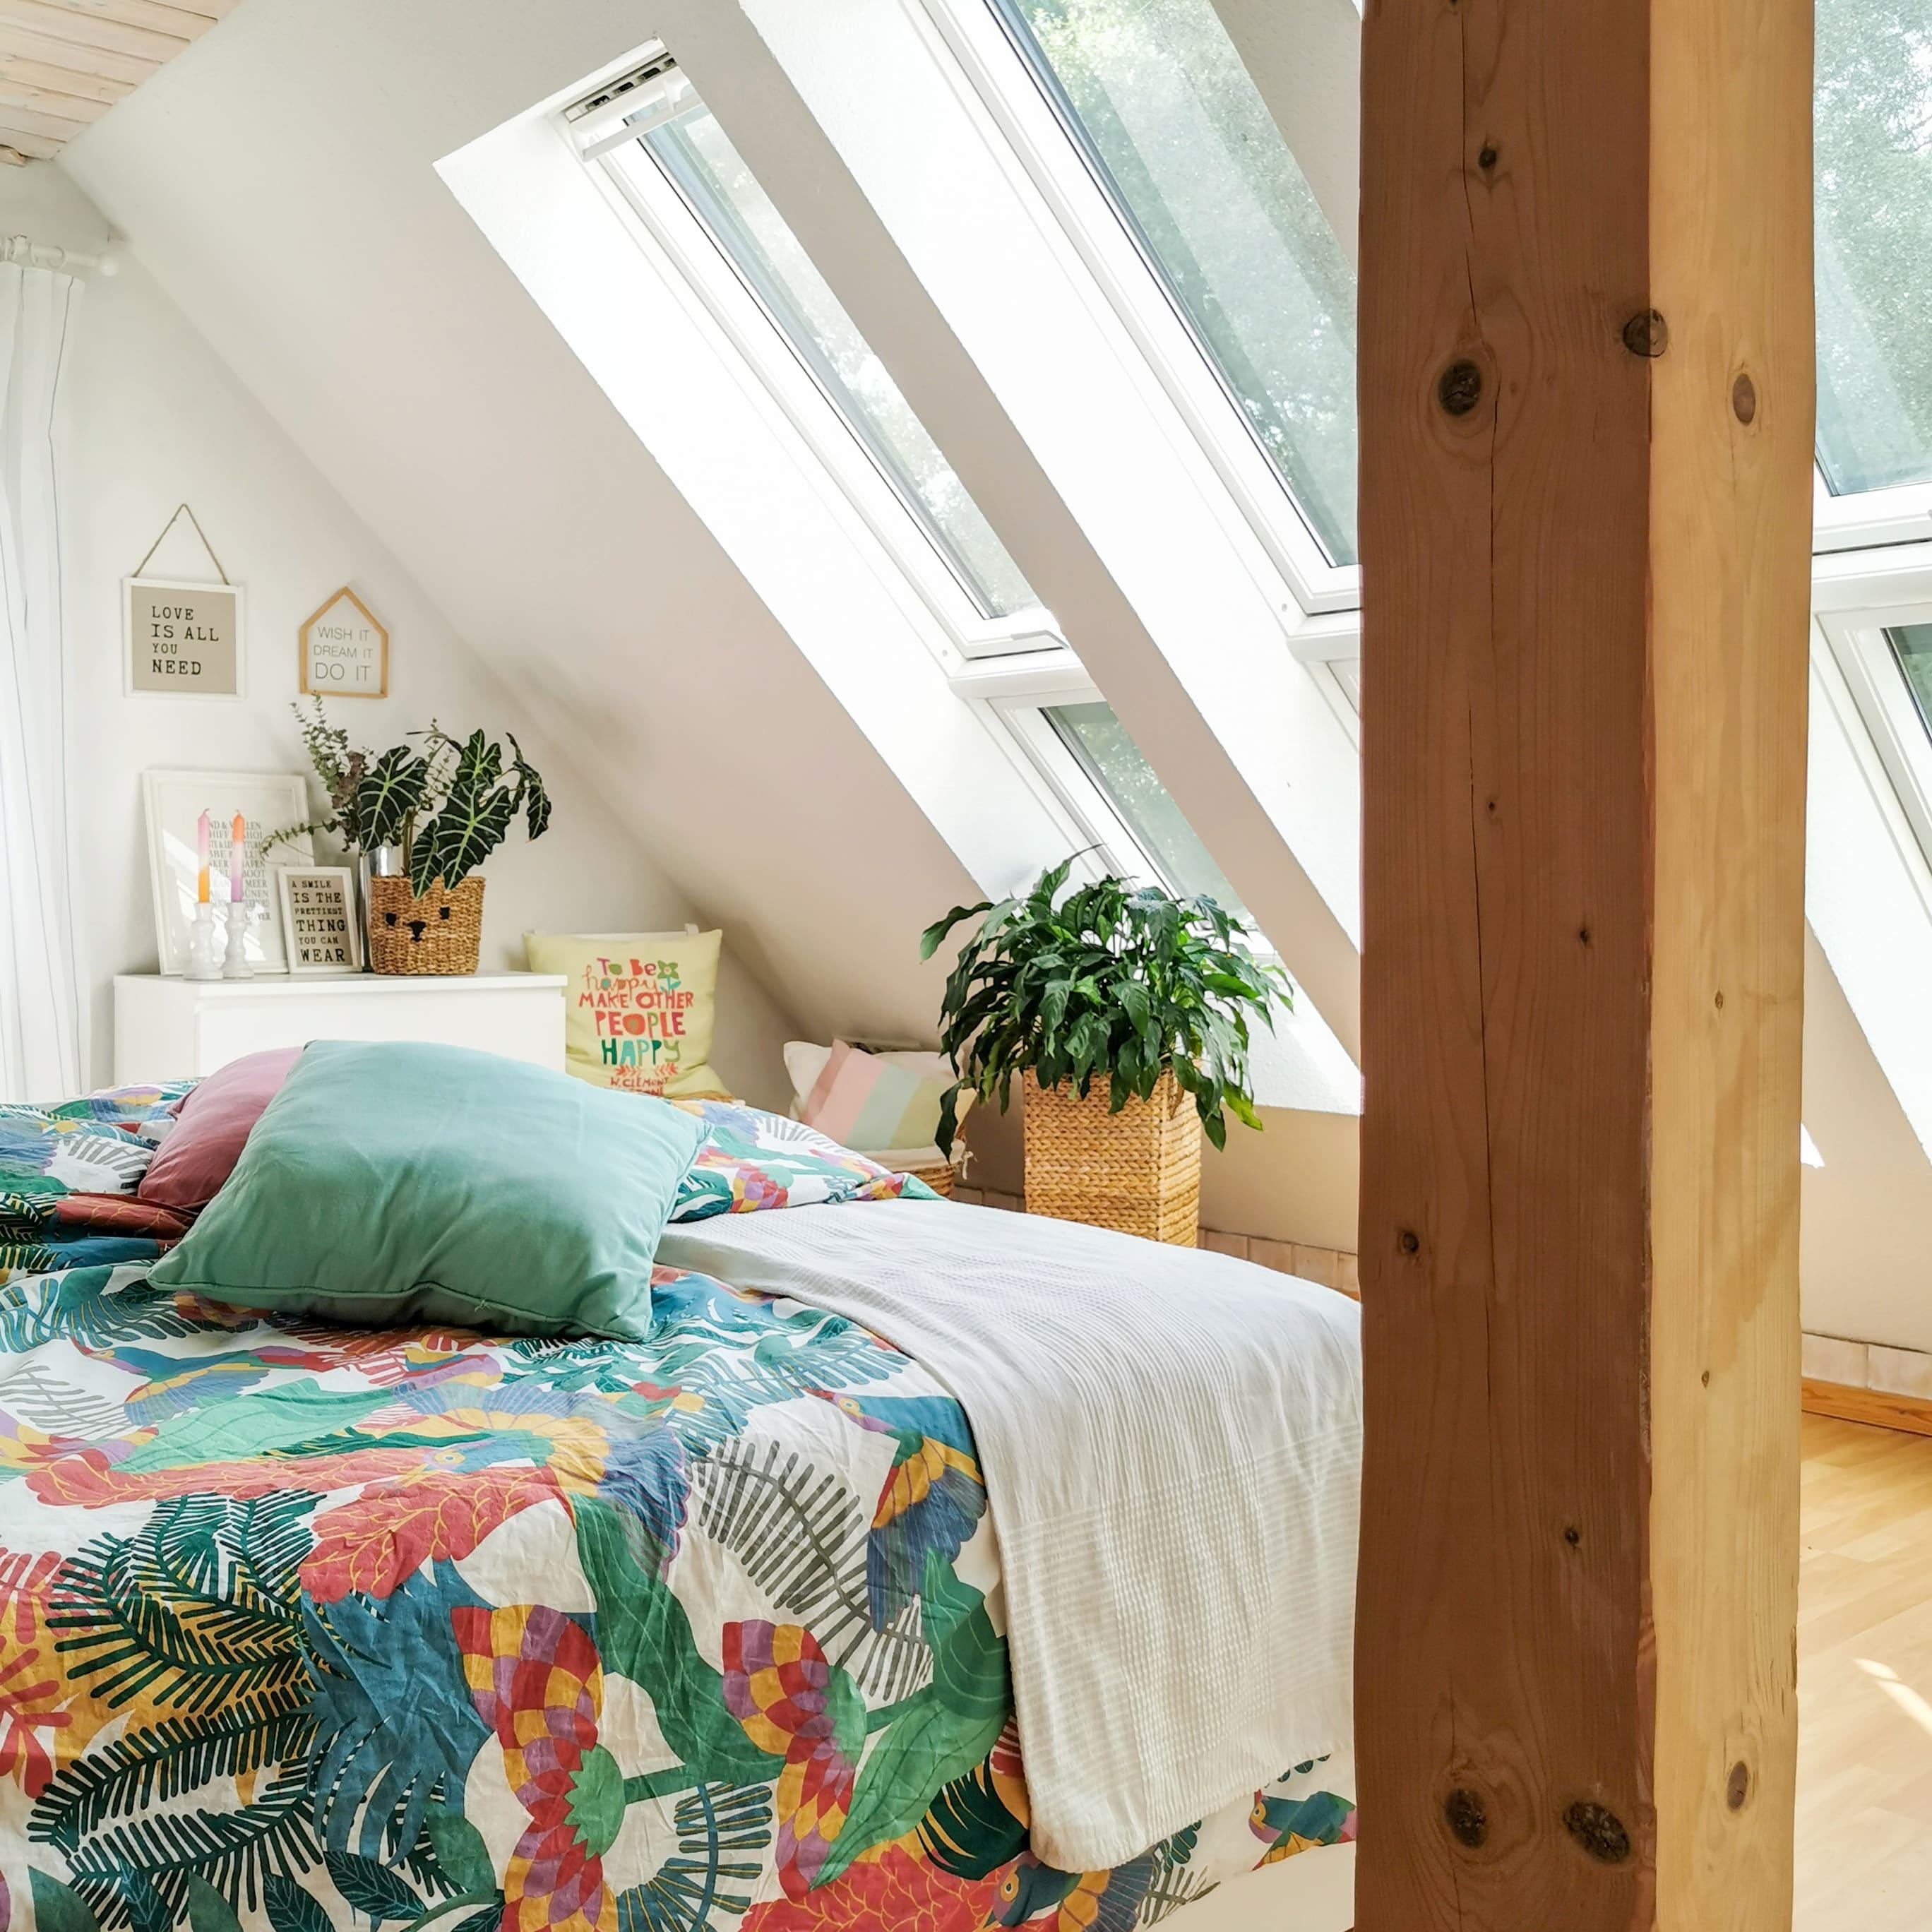 Sommerfeeling im #Schlafzimmer #bedroom #dachfenster #tropicalfeeling #summervibes #urbanjungle 